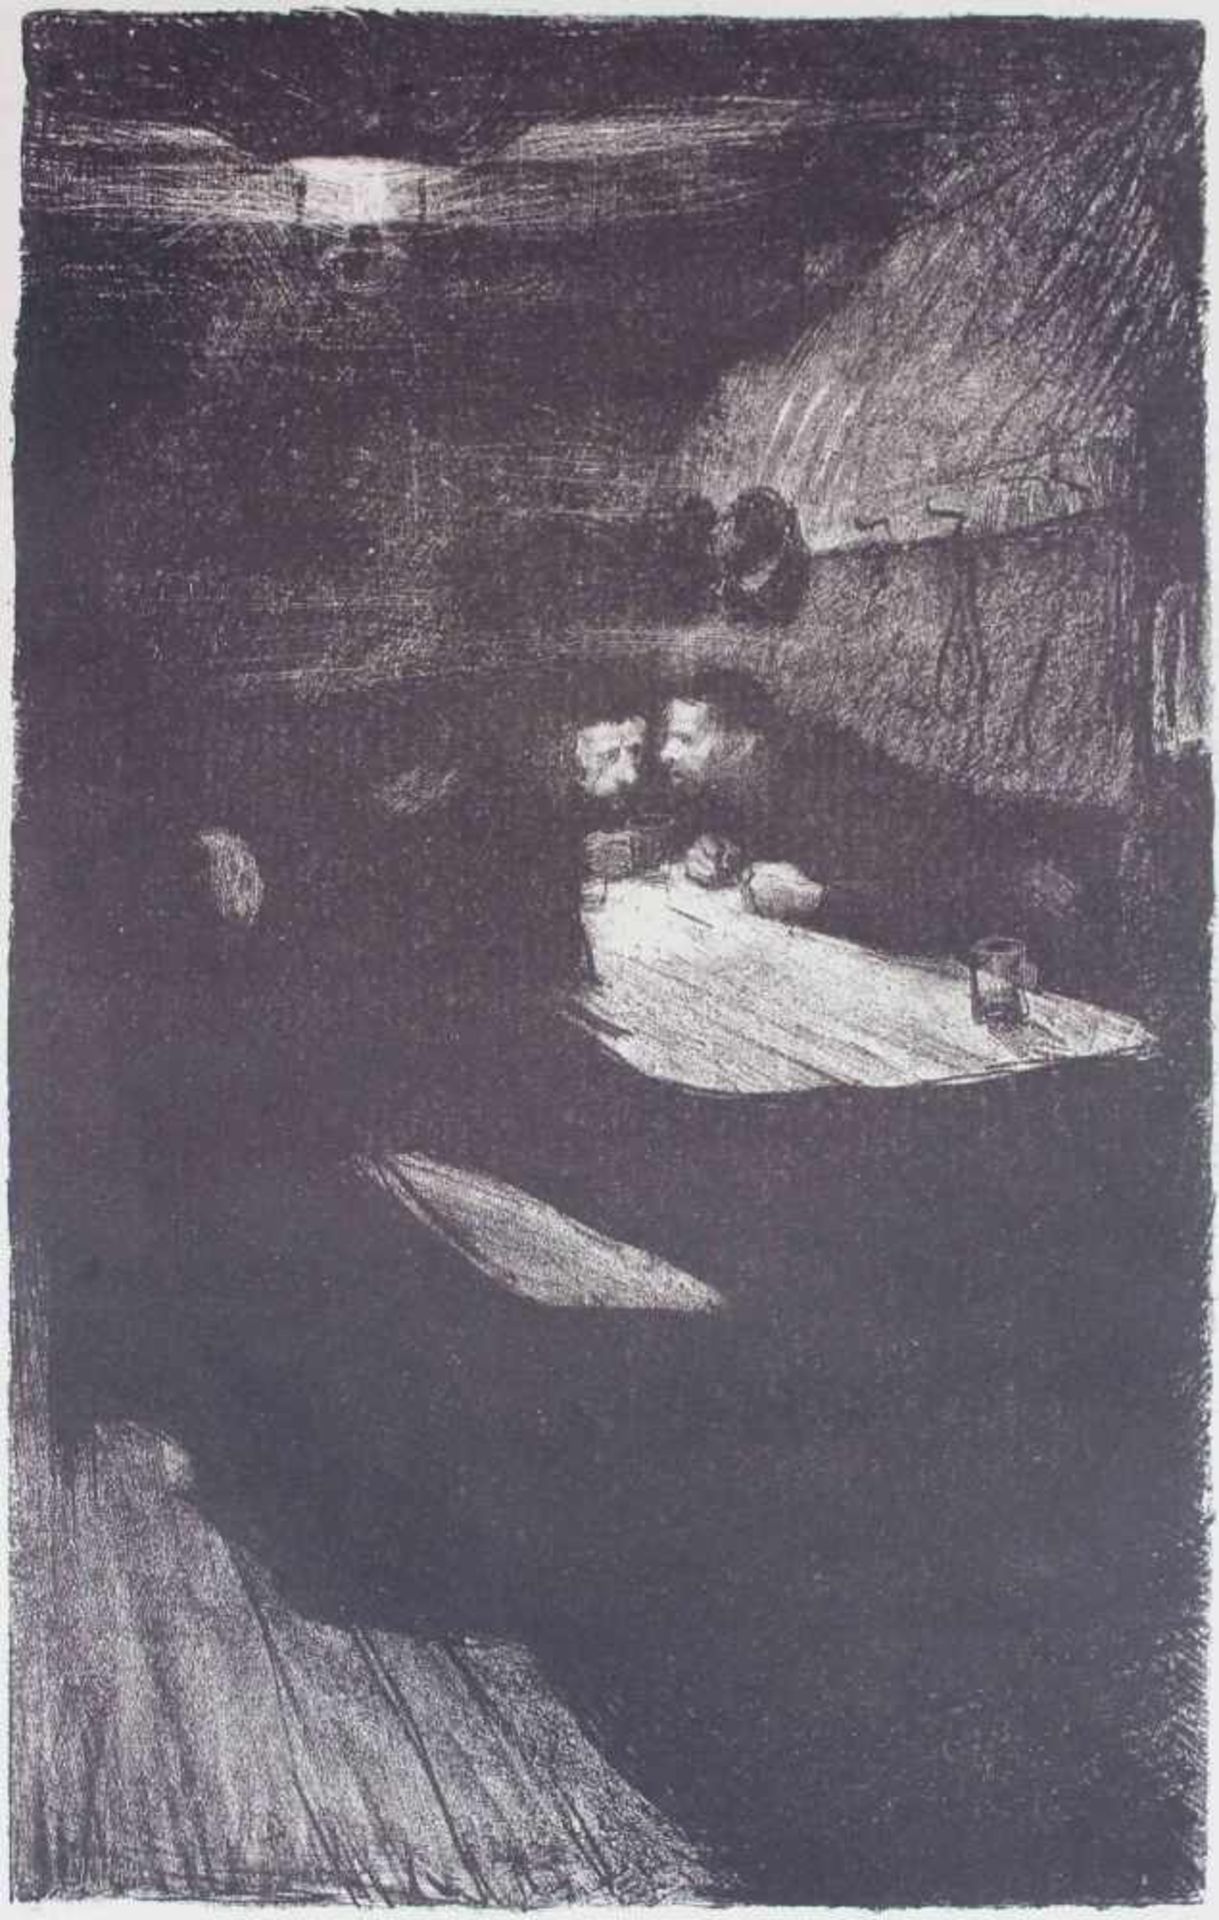 Käthe KOLLWITZ (1867 - 1945). "Beratung". 1898.27,2 cm x 16,9 cm. Blattgröße 46,4 cm x 34,7 cm.